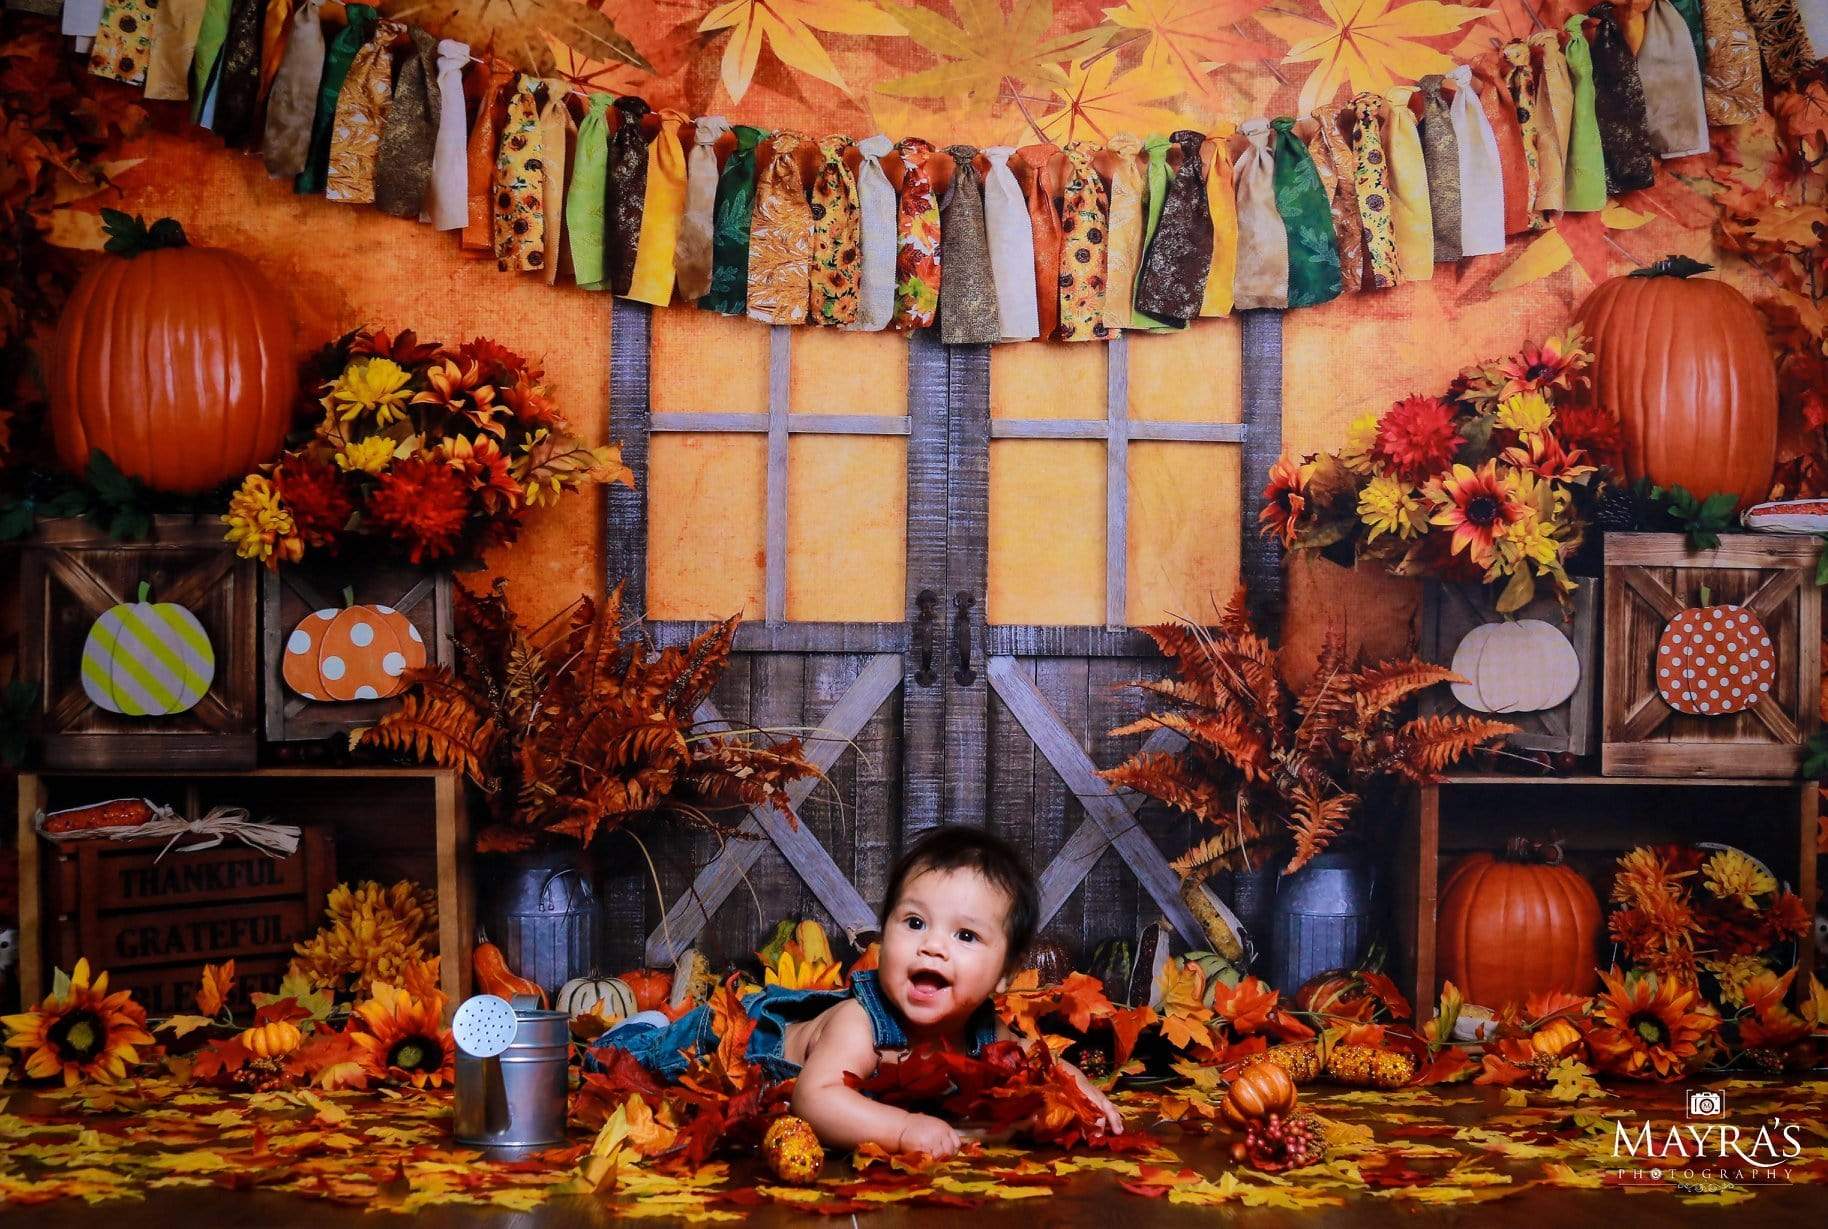 Kate Autumn Harvest Thanksgiving Backdrop